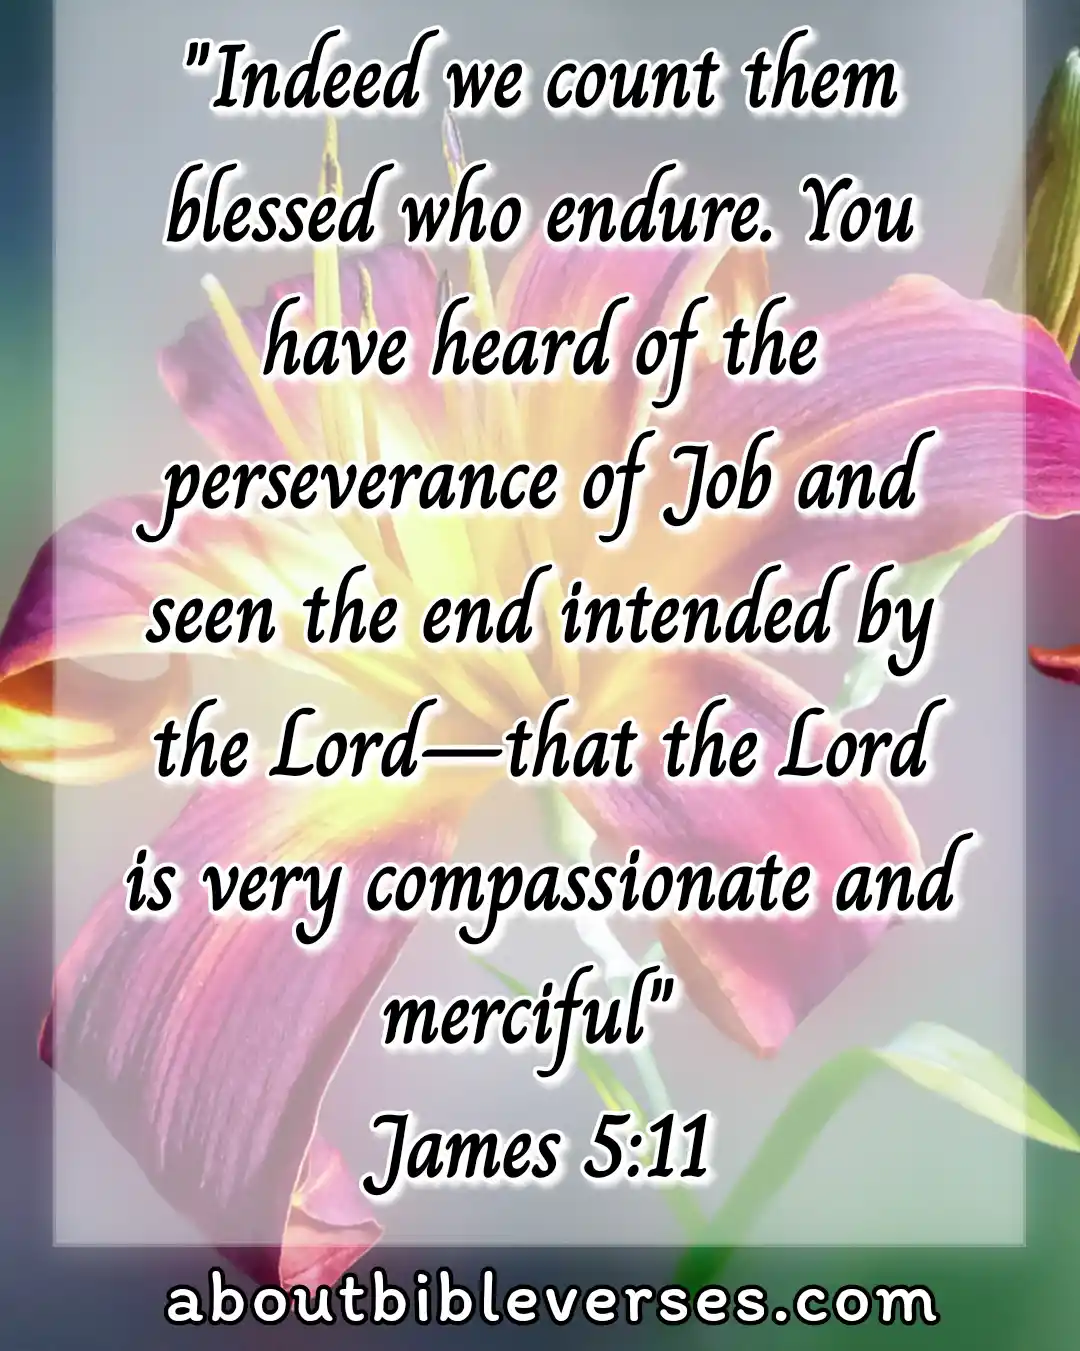 God Blessed Us (James 5:11)